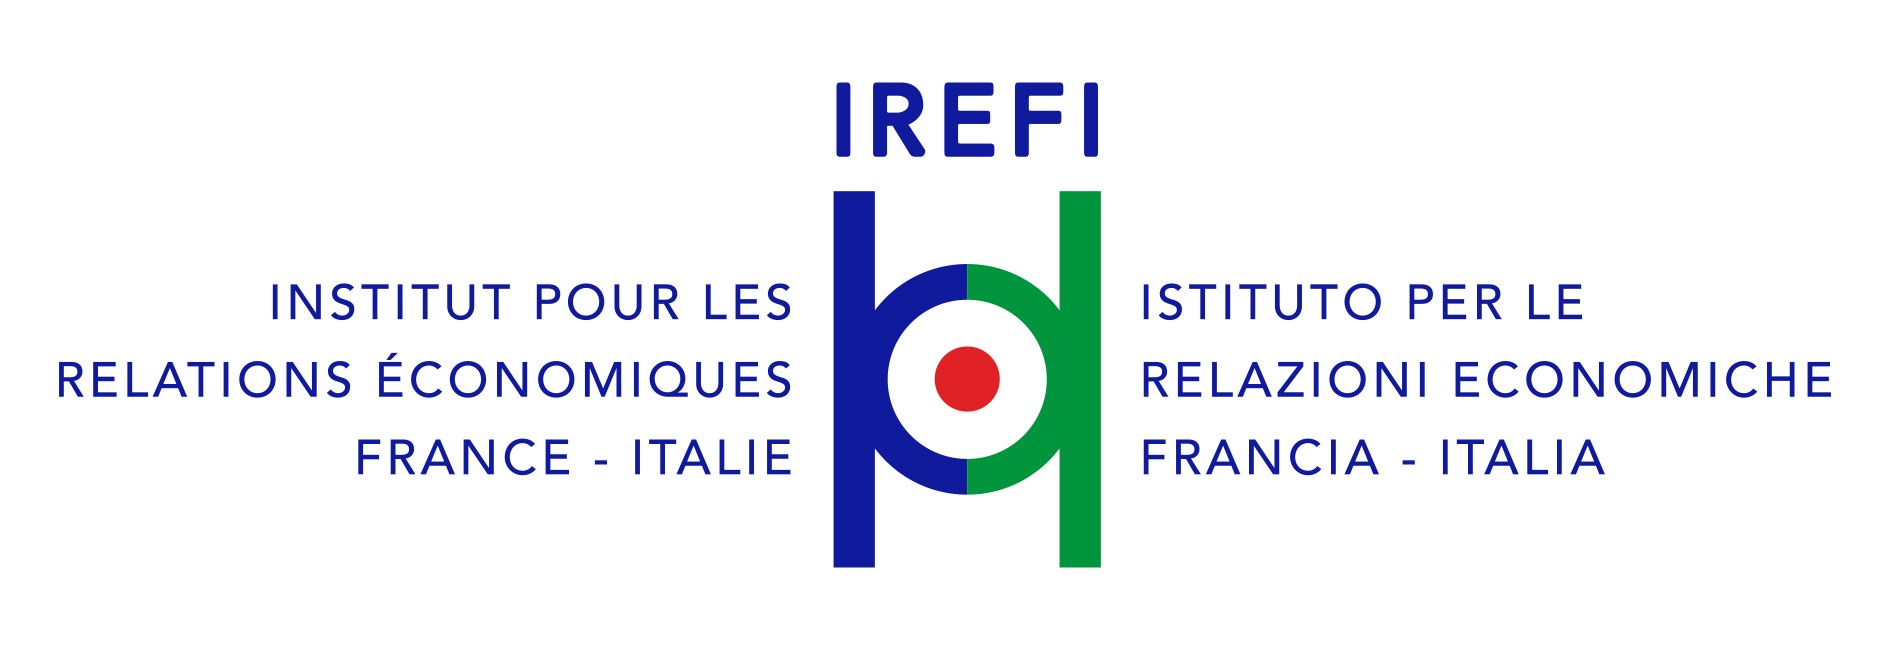 Irefi Institut Pour Les Relations Economiques France Italie